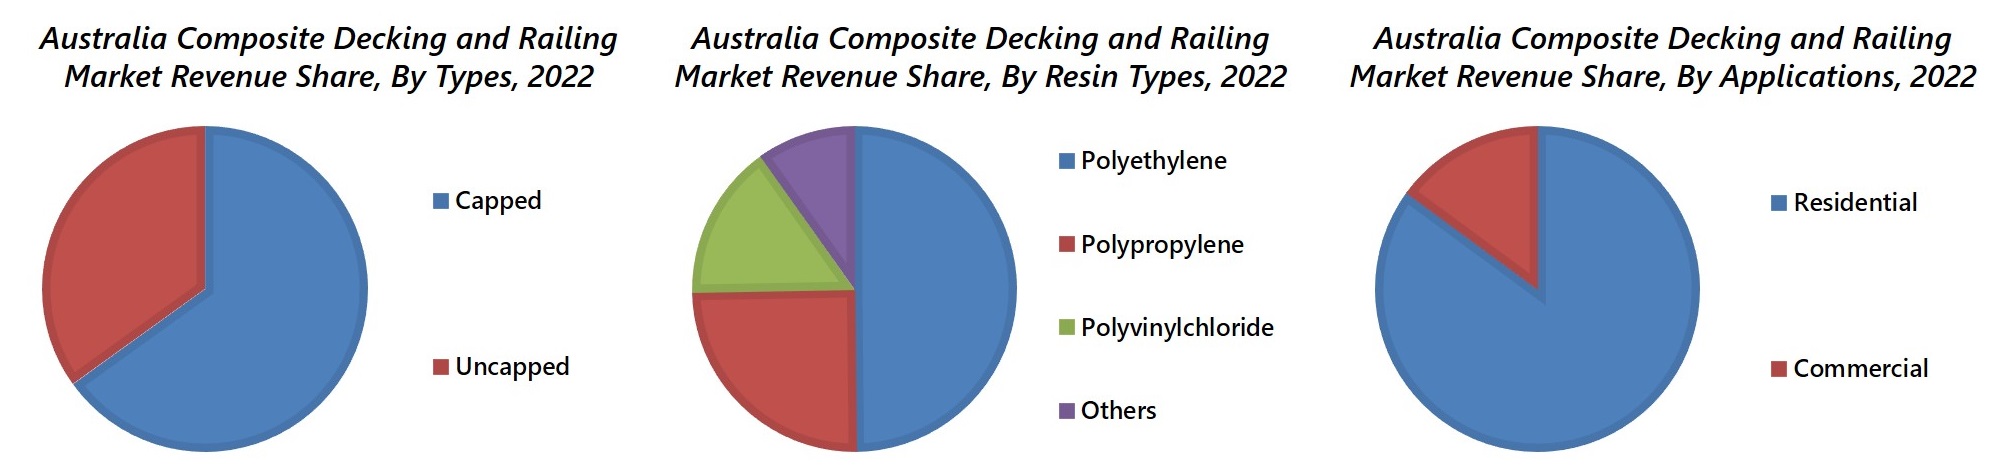 Australia Composite Decking and Railing Market